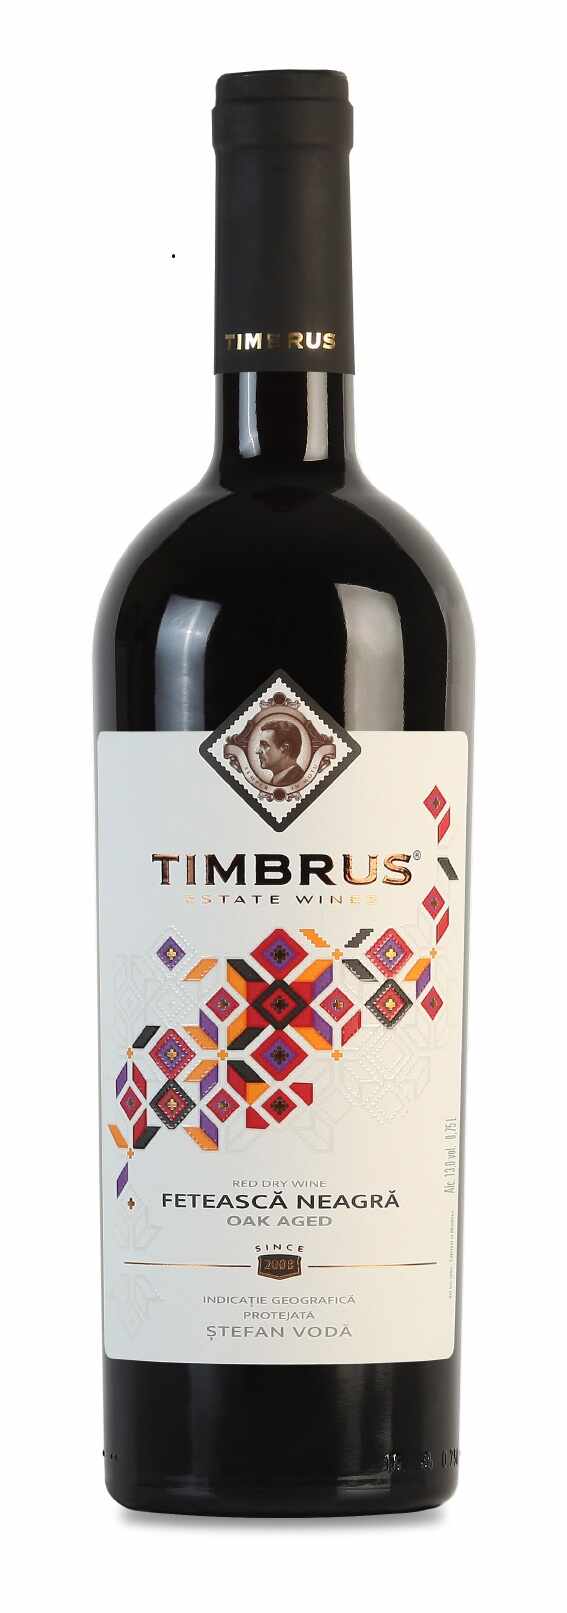 Vin rosu - Timbrus, Feteasca Neagra, sec, 2016 | Timbrus